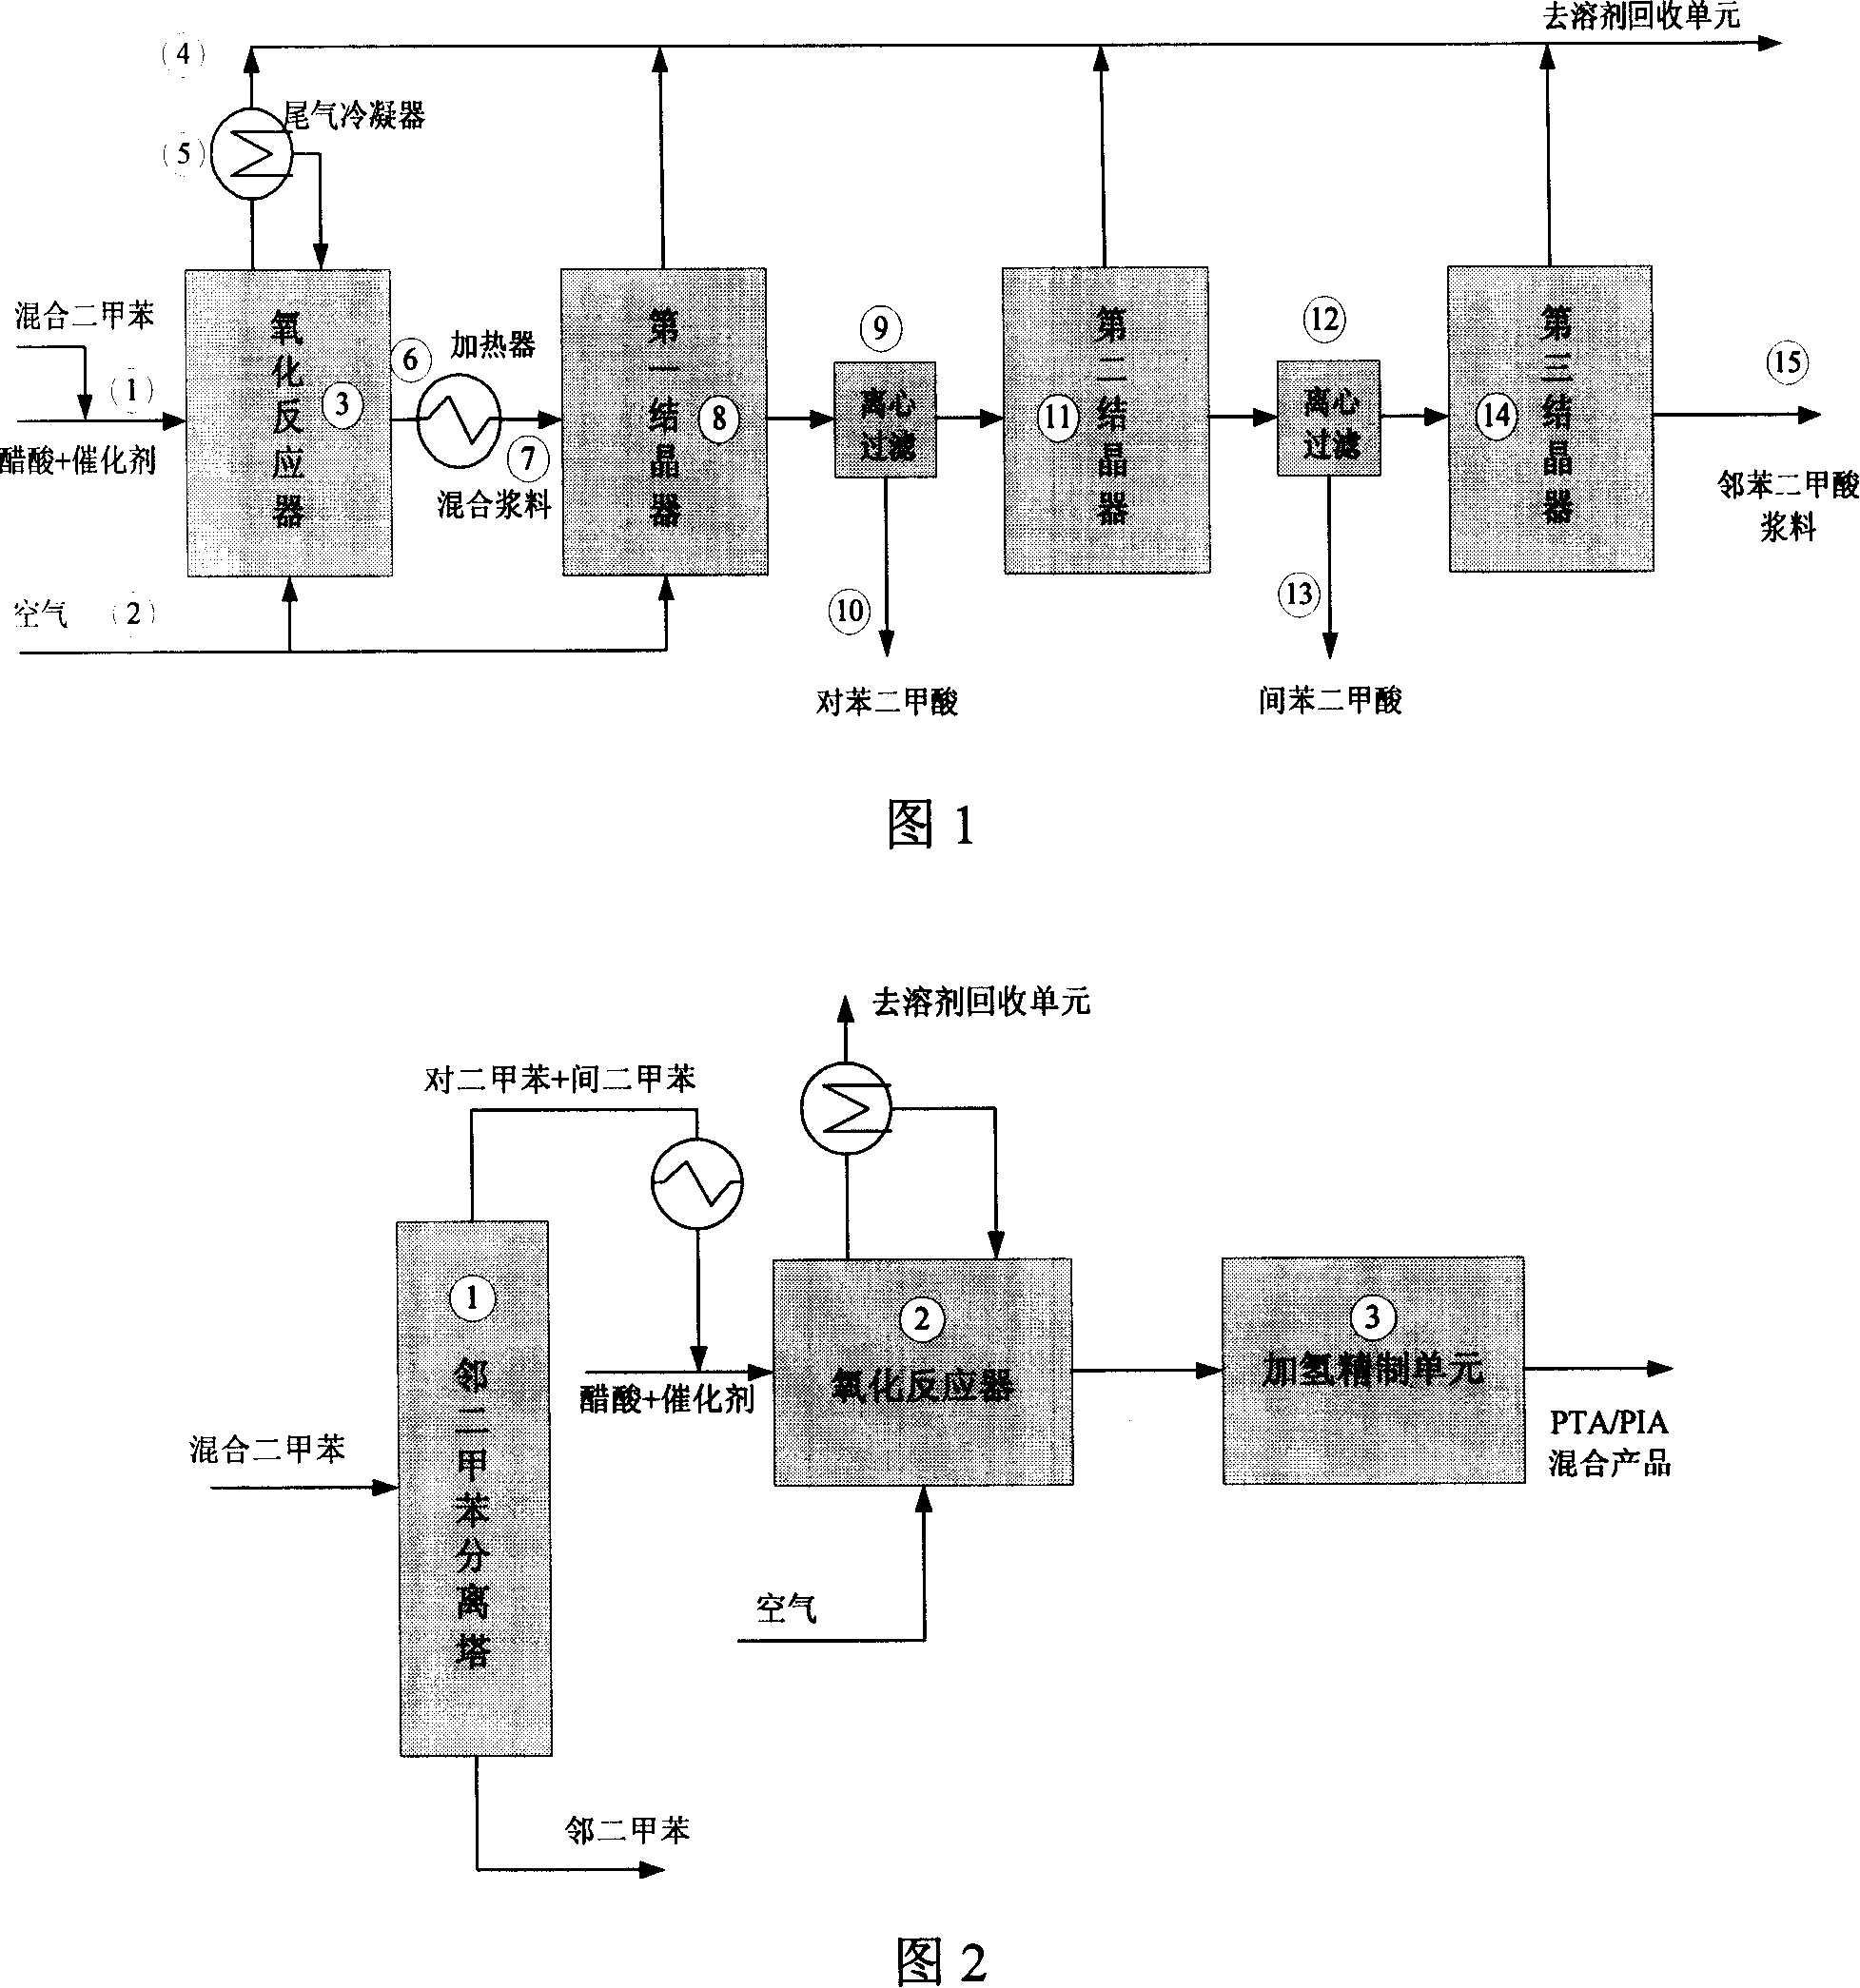 Method for producing benzene dicarboxylic acid by mixed dimethylbenzene cooxidation